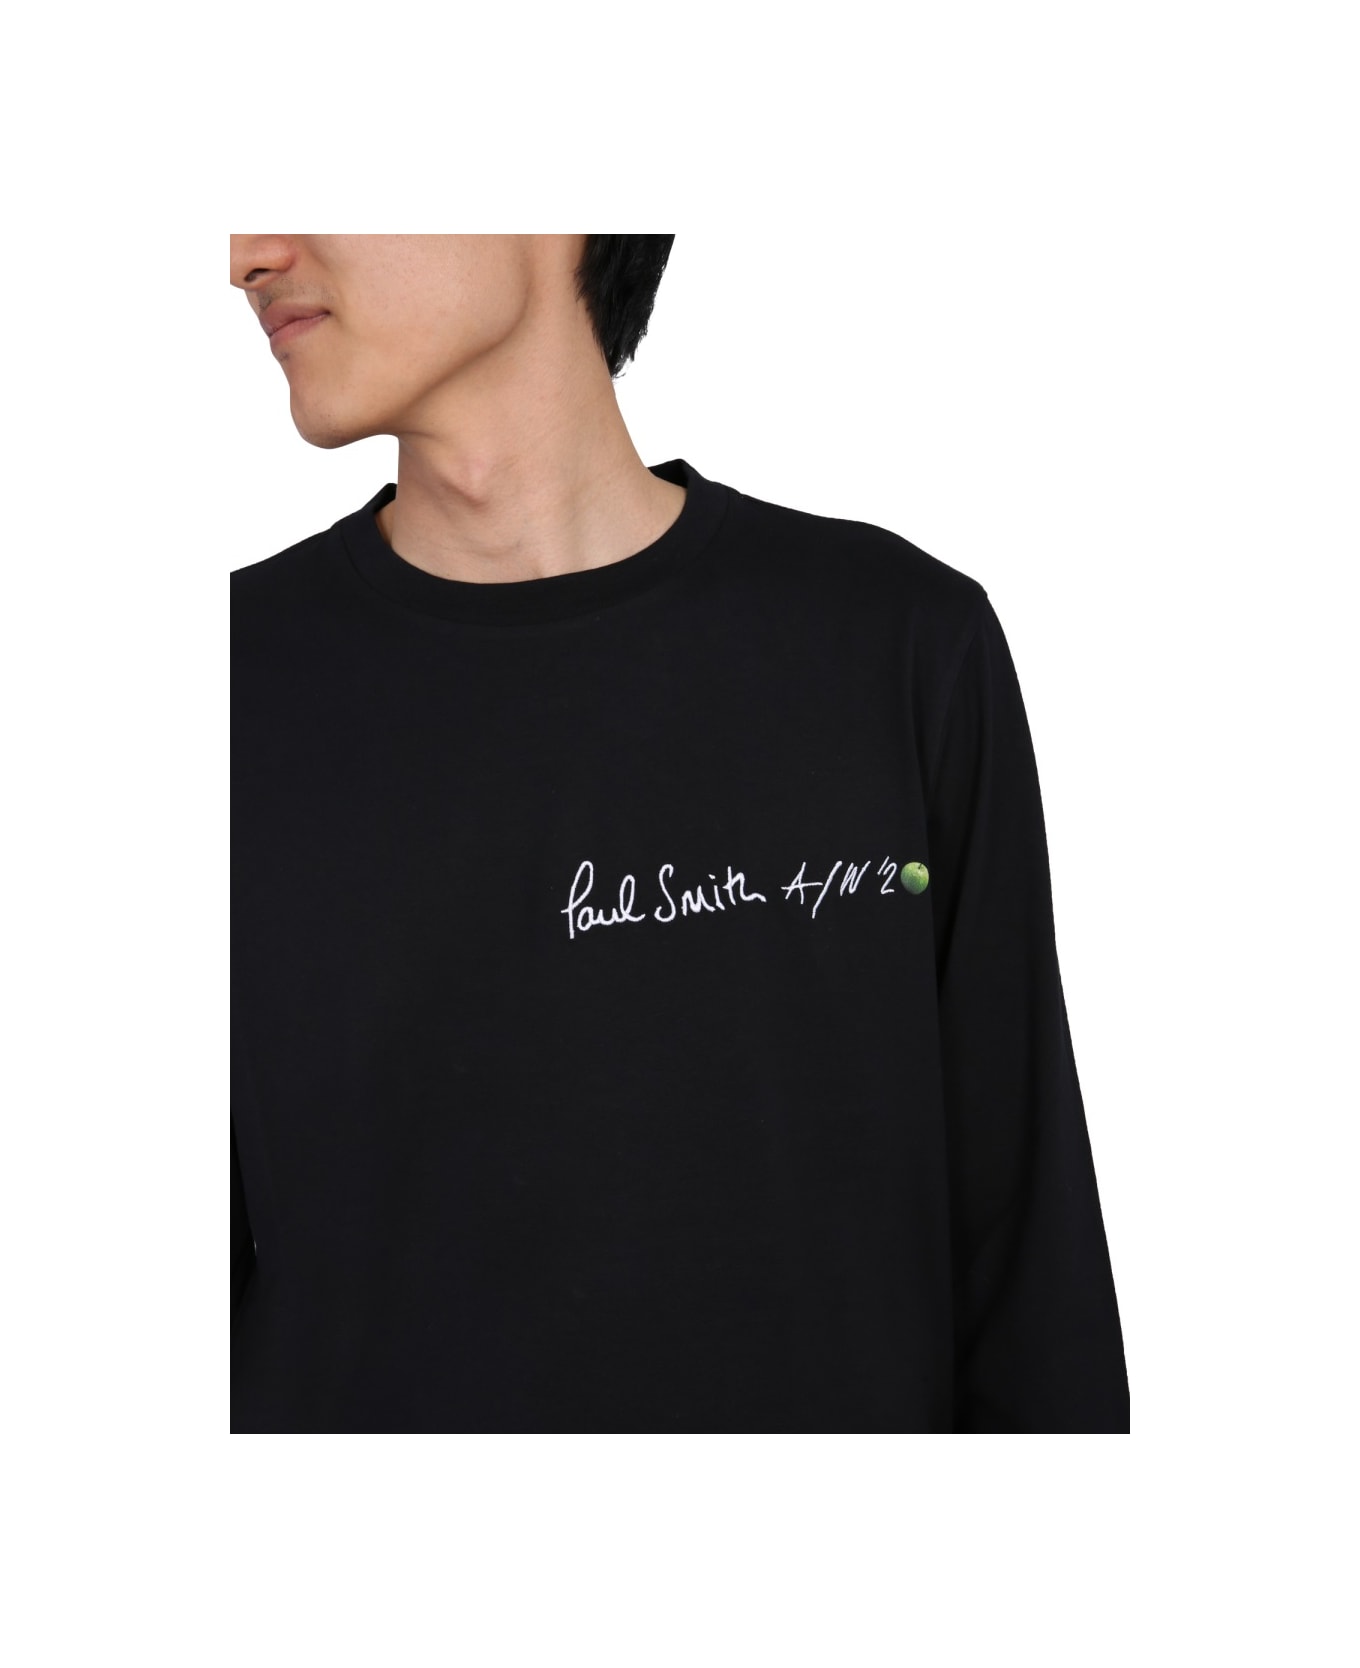 Paul Smith Long Sleeve T-shirt - BLACK